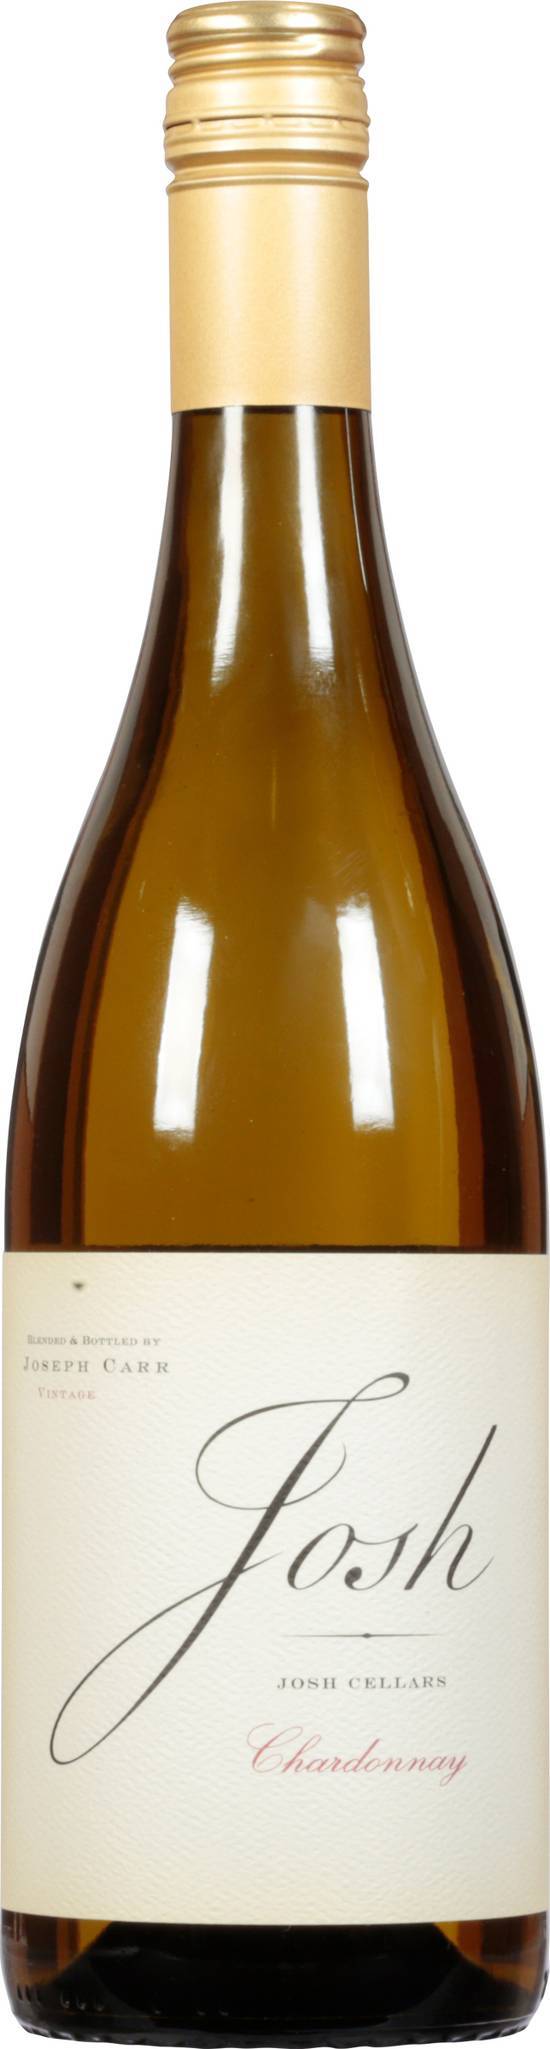 Josh Cellars California Chardonnay Wine (750 ml)